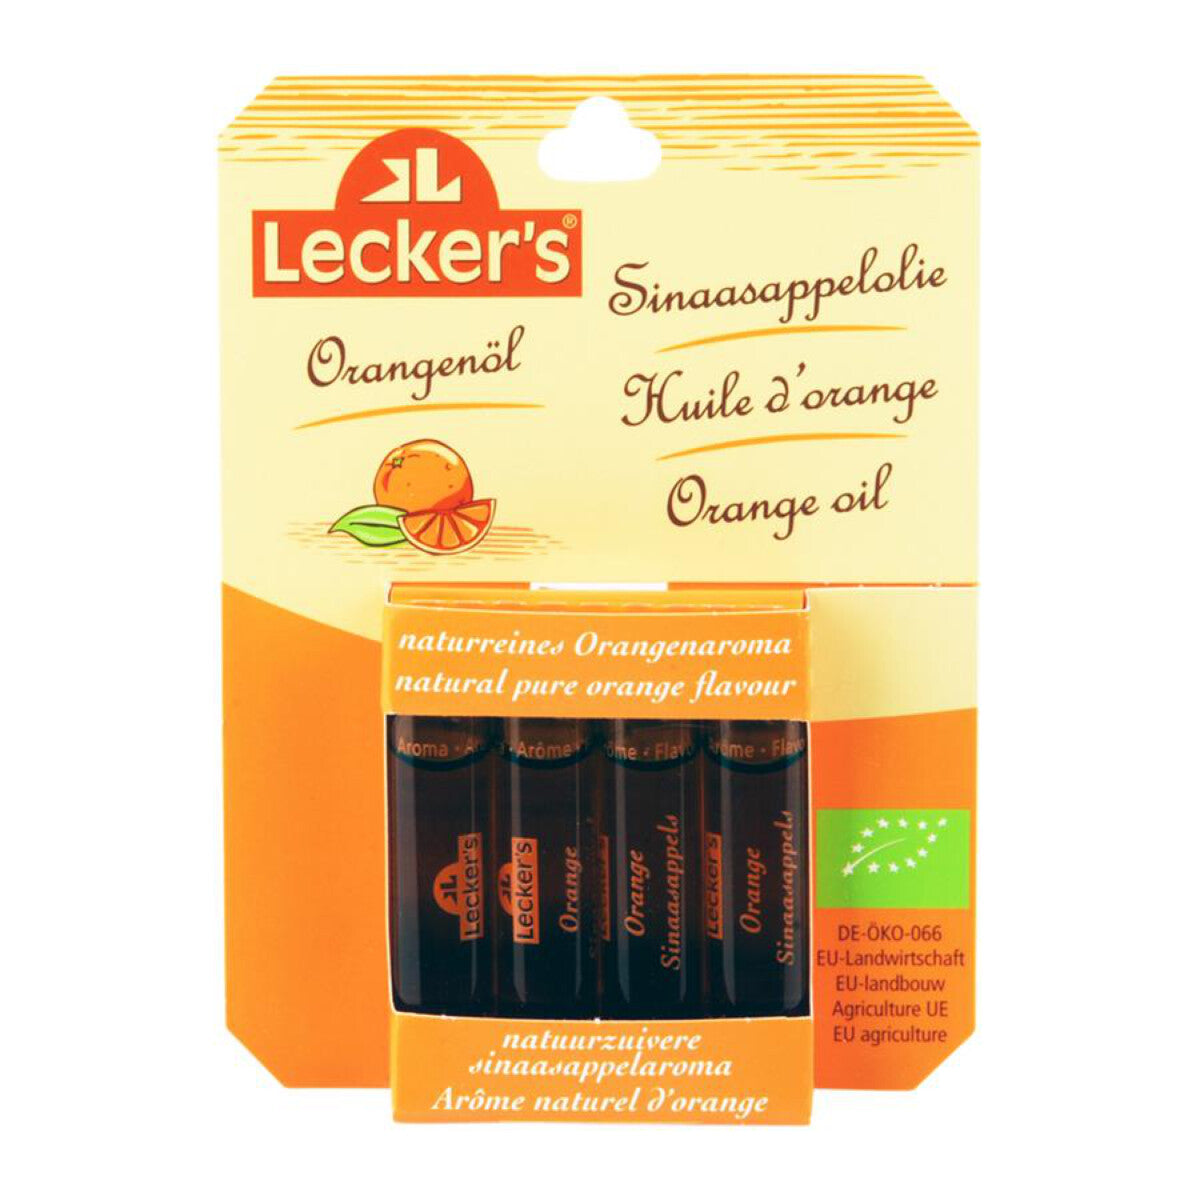 LECKERS Orangenöl - 8 ml (4 x 2 ml)